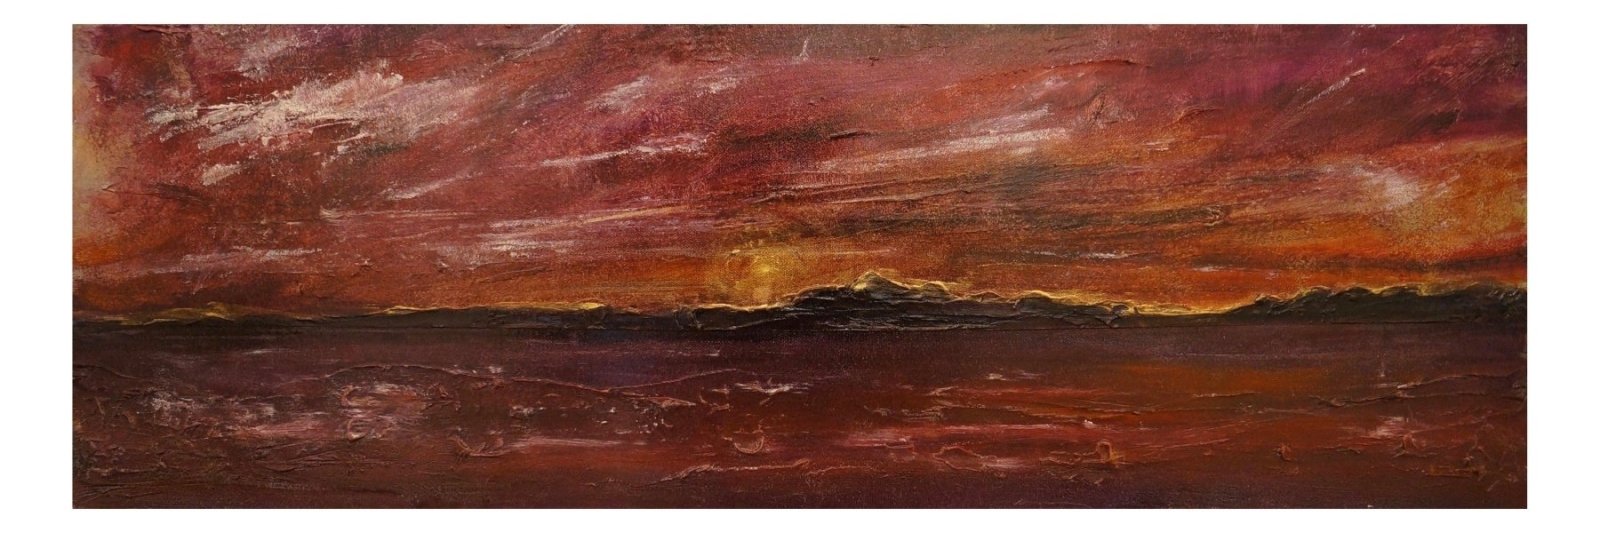 Arran Winter Dusk ii-Panoramic Prints-Arran Art Gallery-Paintings, Prints, Homeware, Art Gifts From Scotland By Scottish Artist Kevin Hunter